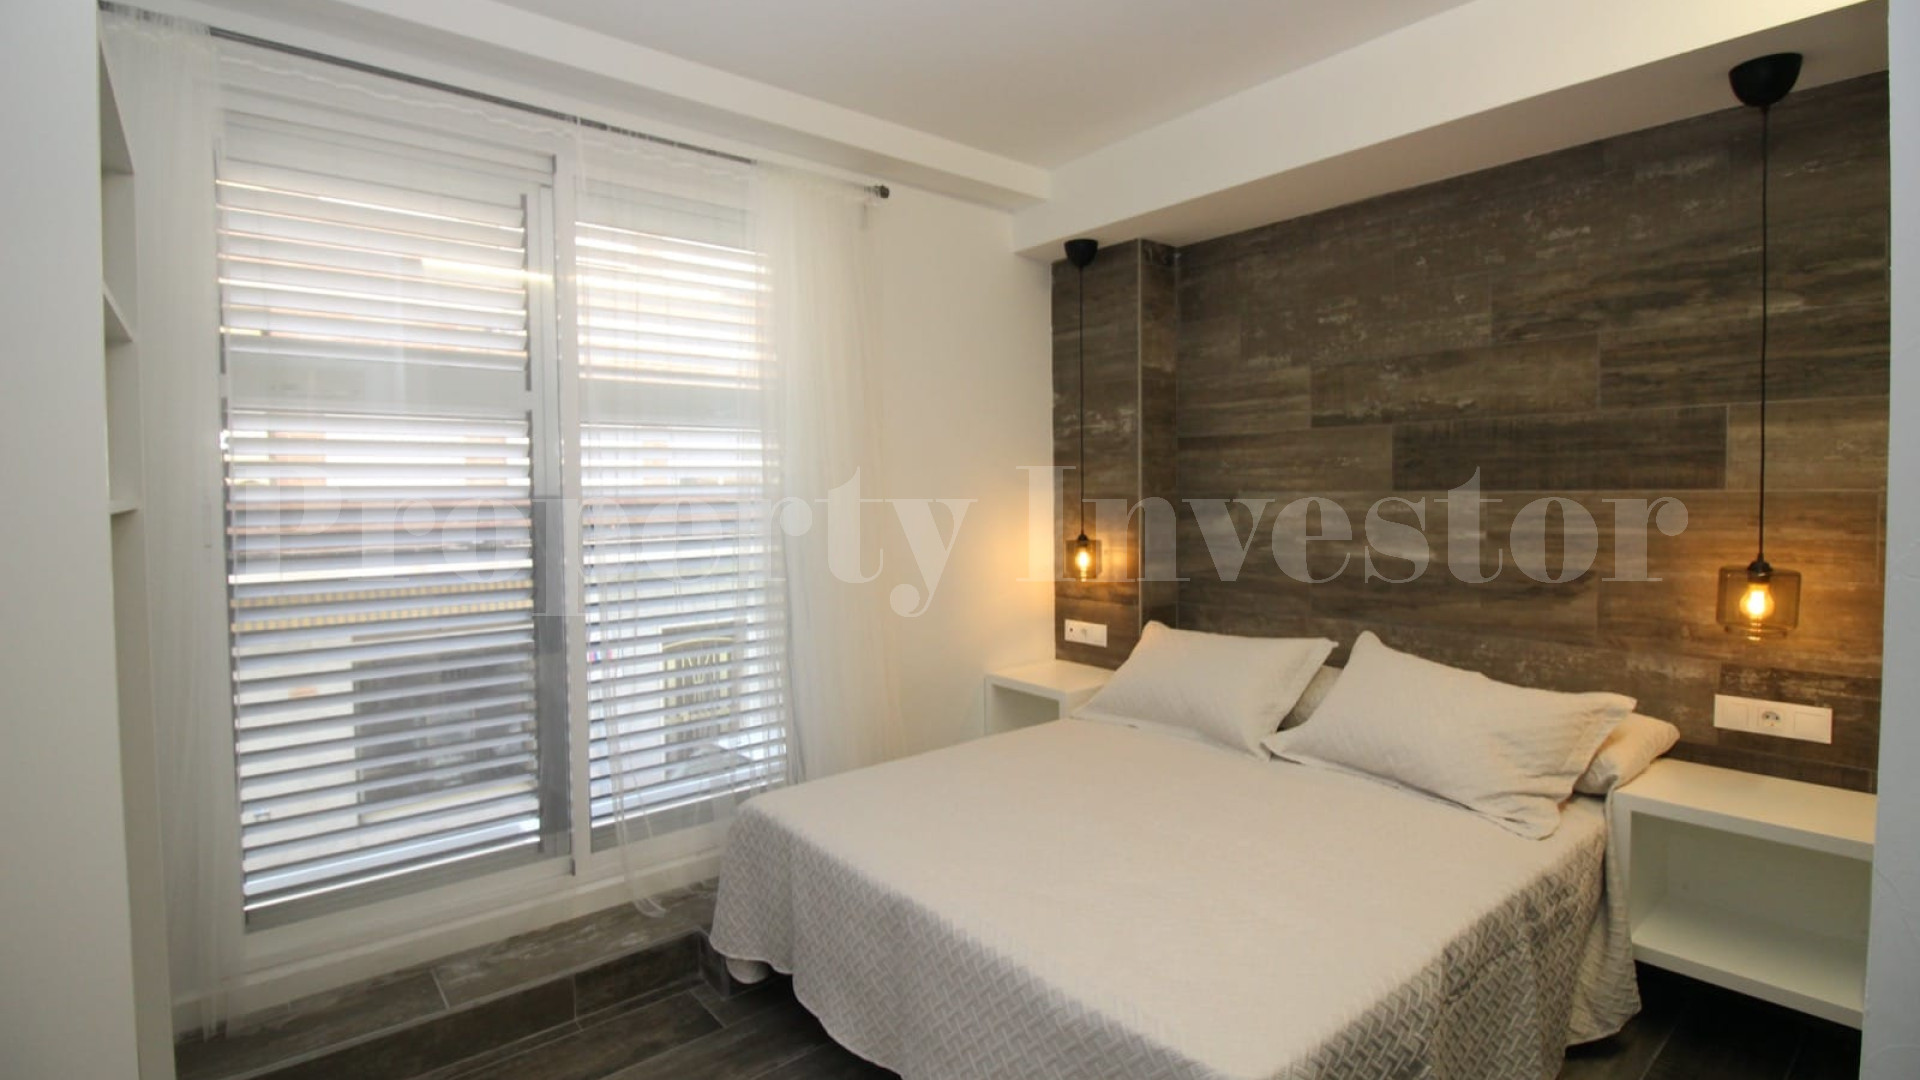 Comfortable 6 Double Bedroom Hotel for Sale in Santa Pola, Spain